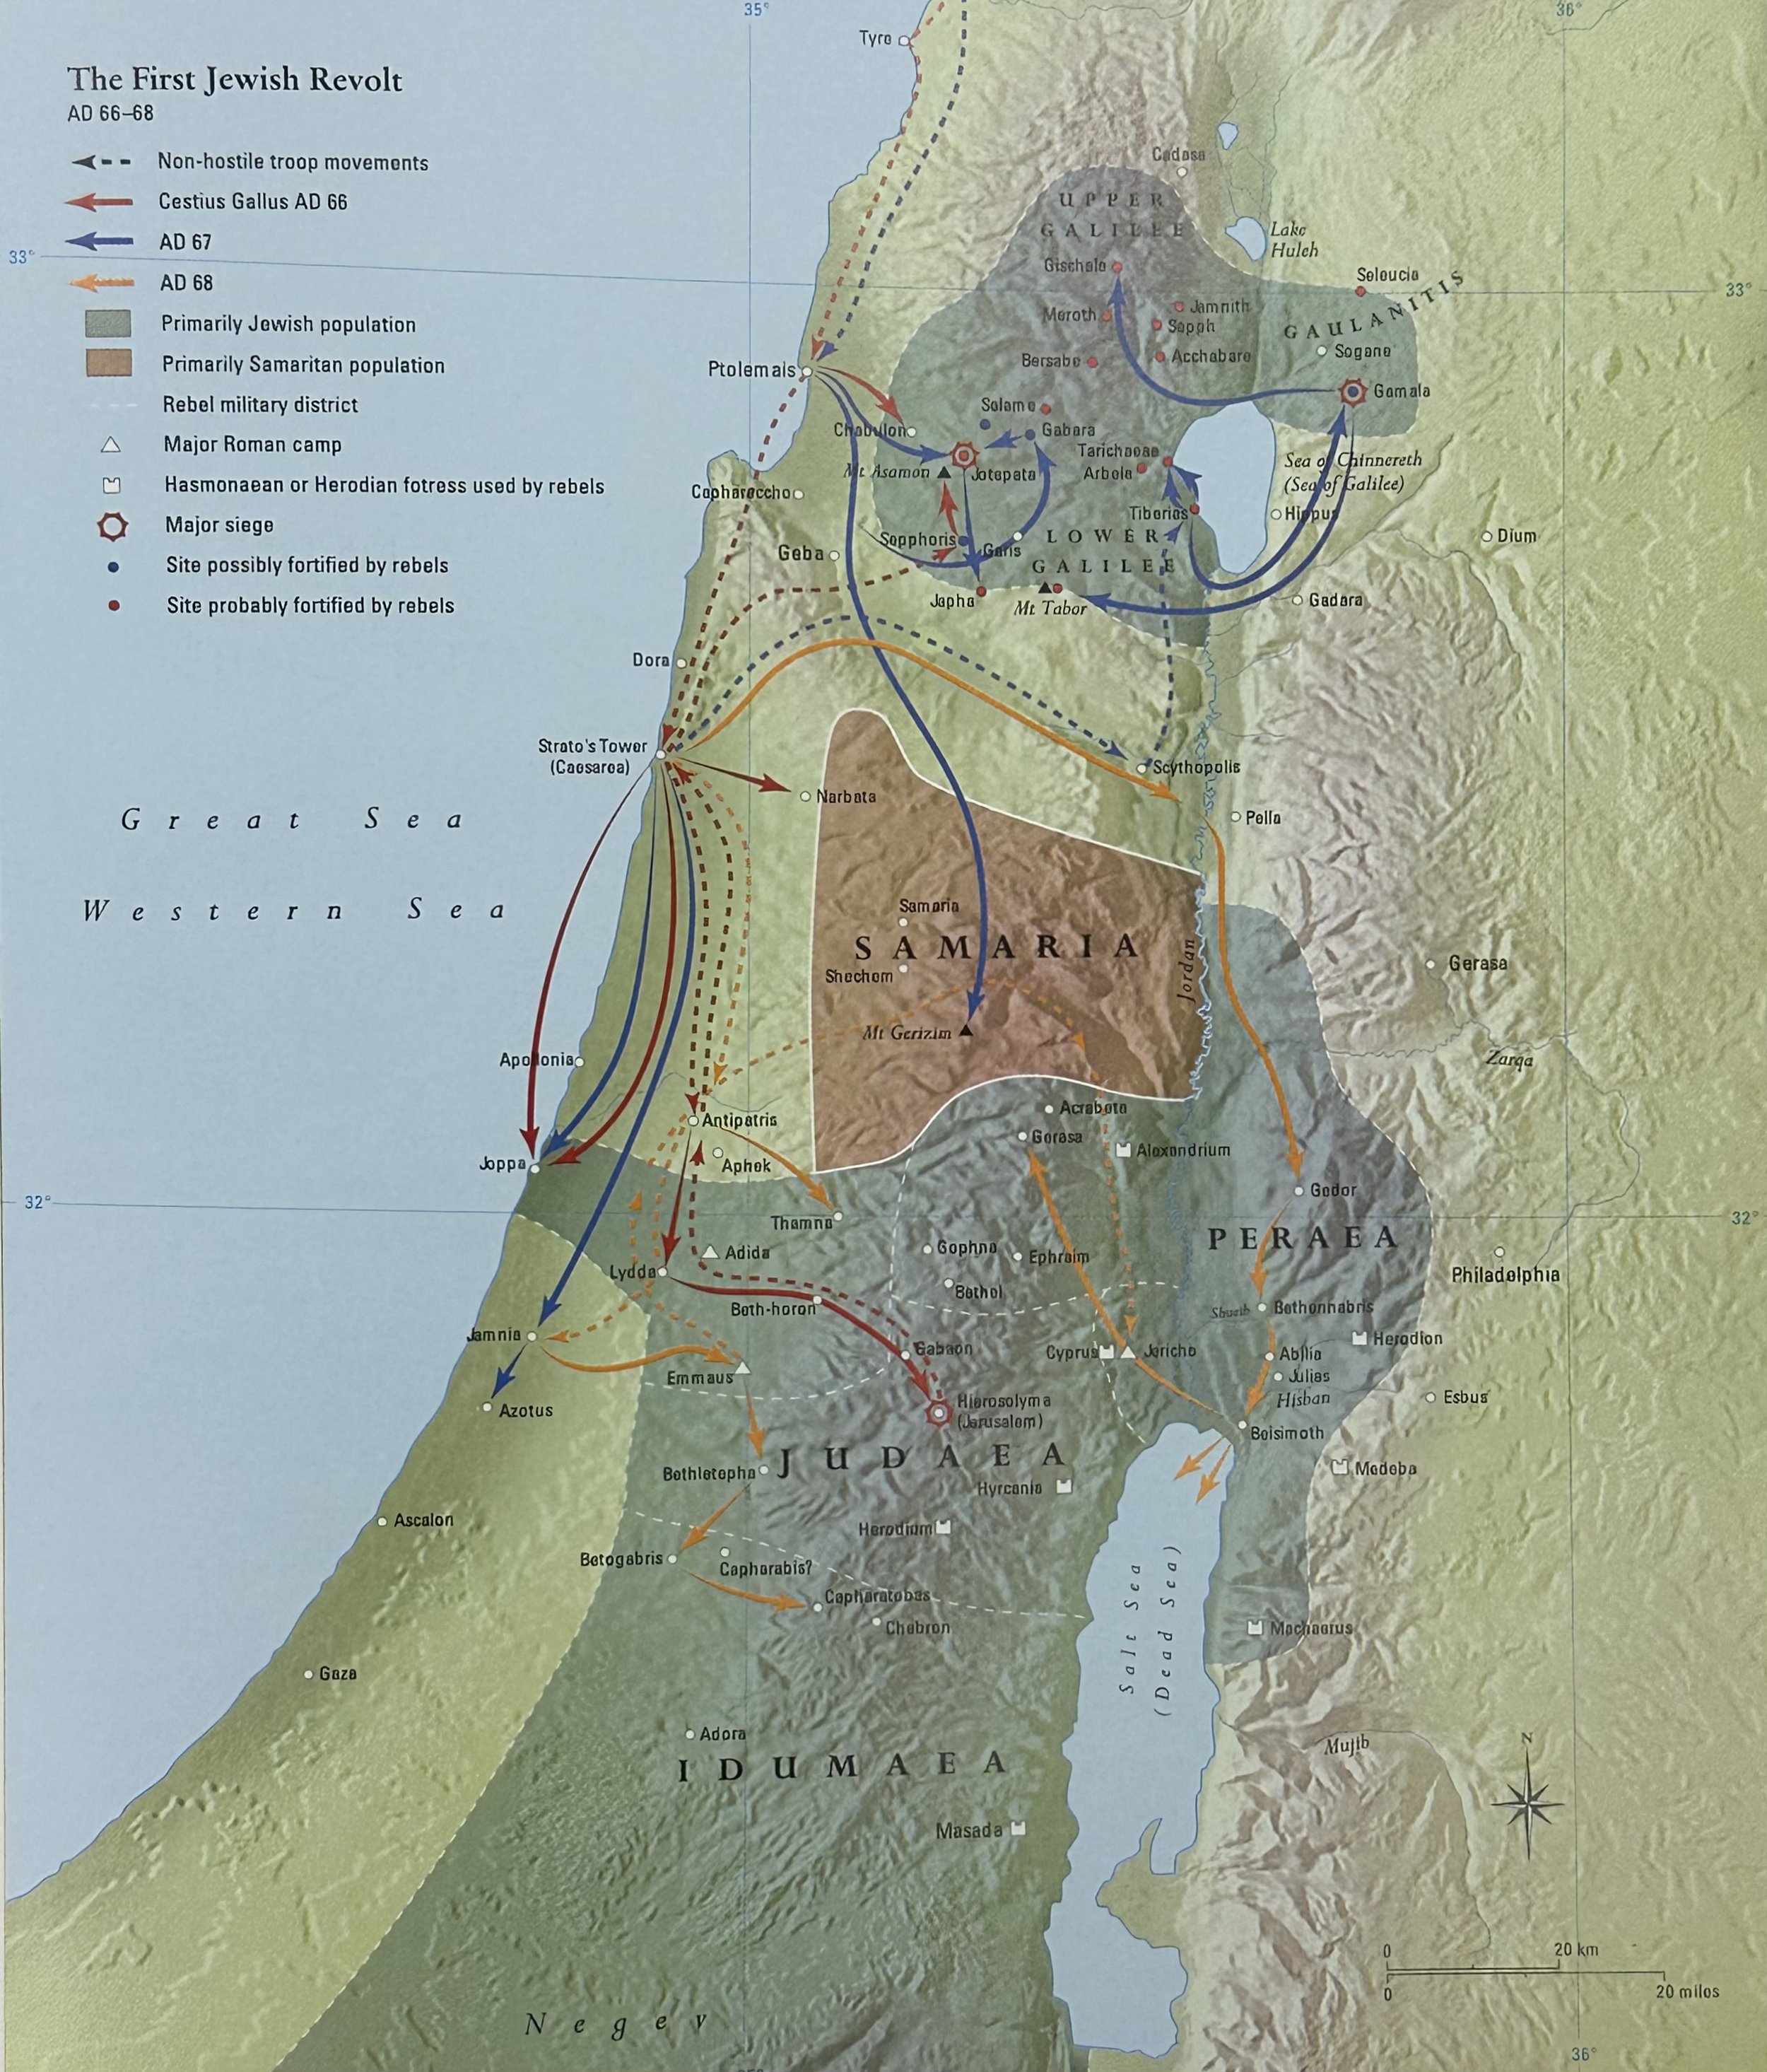 66-68 First Jewish Revolt Atlas of the Bible.jpeg